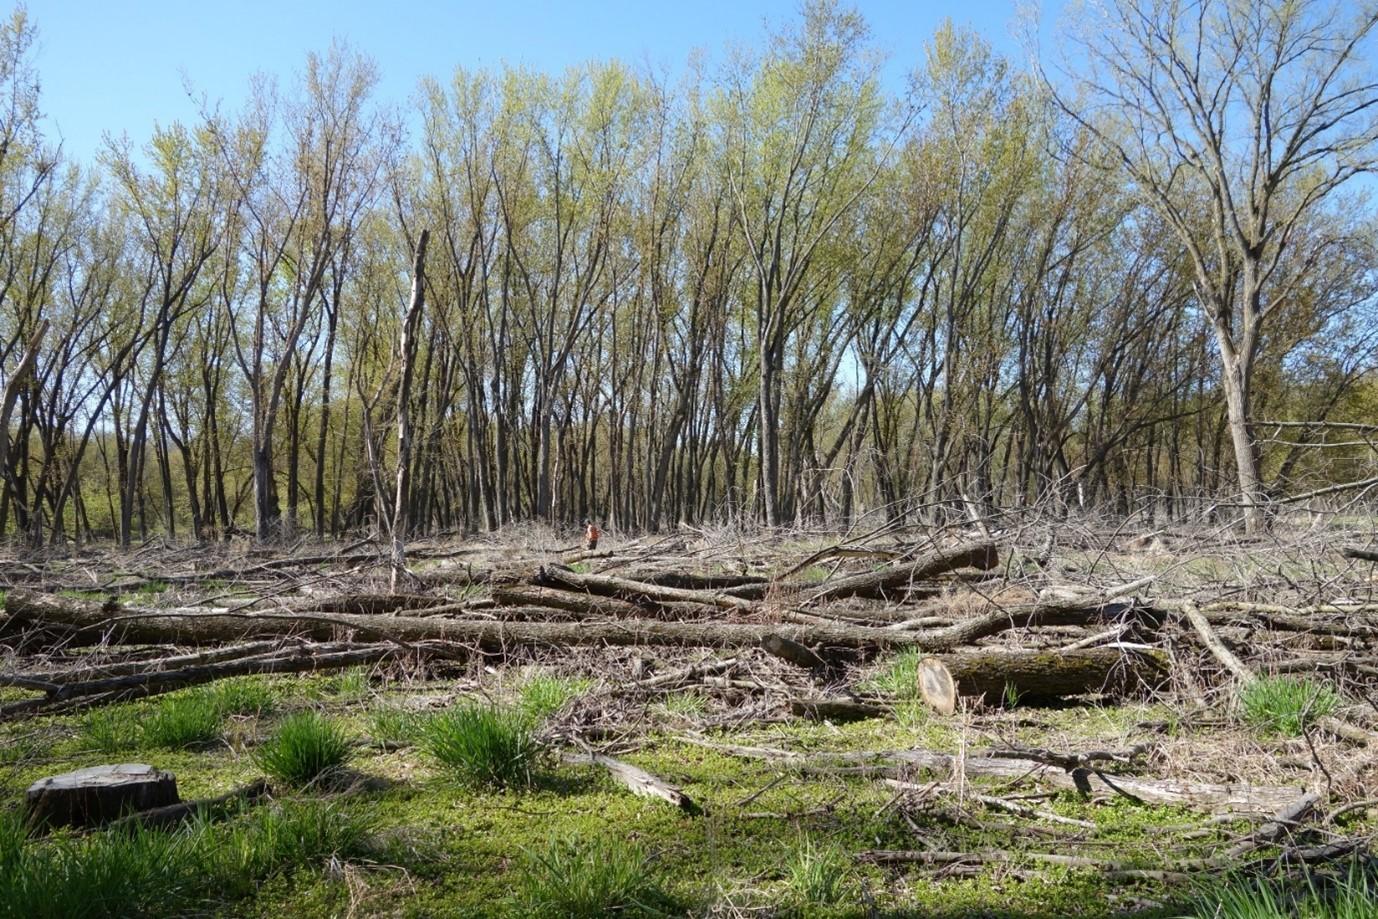 Gap harvest with abundant coarse woody debris in spring 2021.